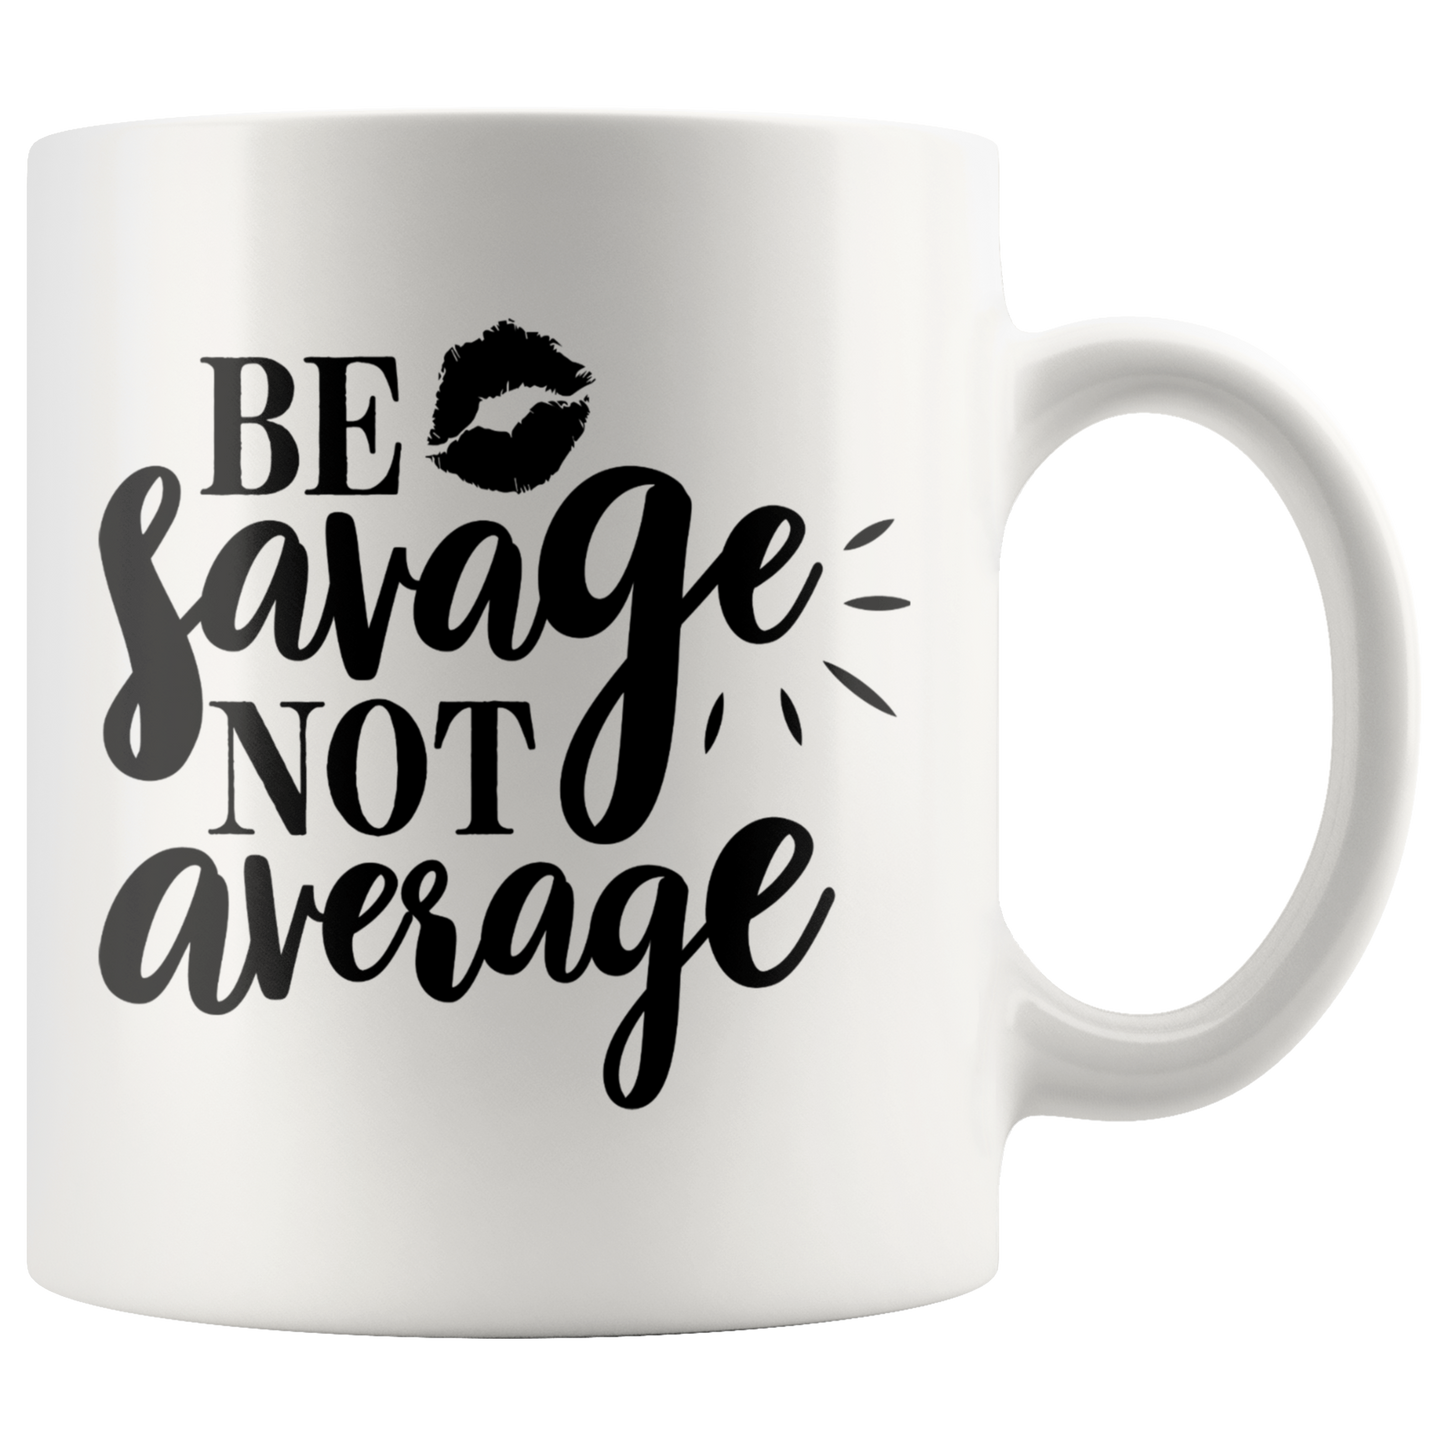 Funny coffee mug Sassy Sarcastic quote 